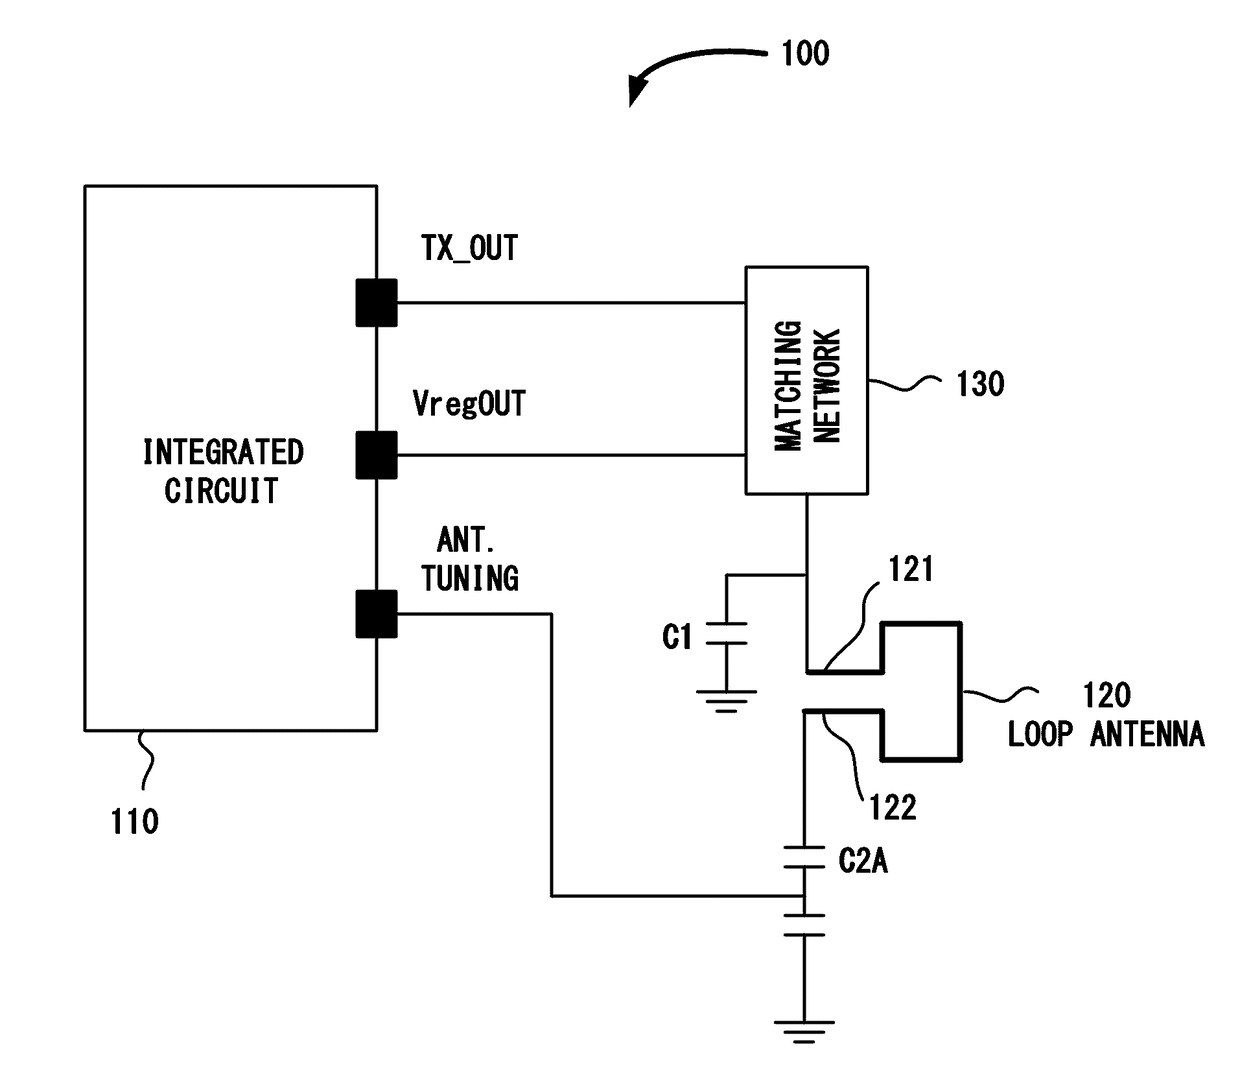 Impedance tuning circuit